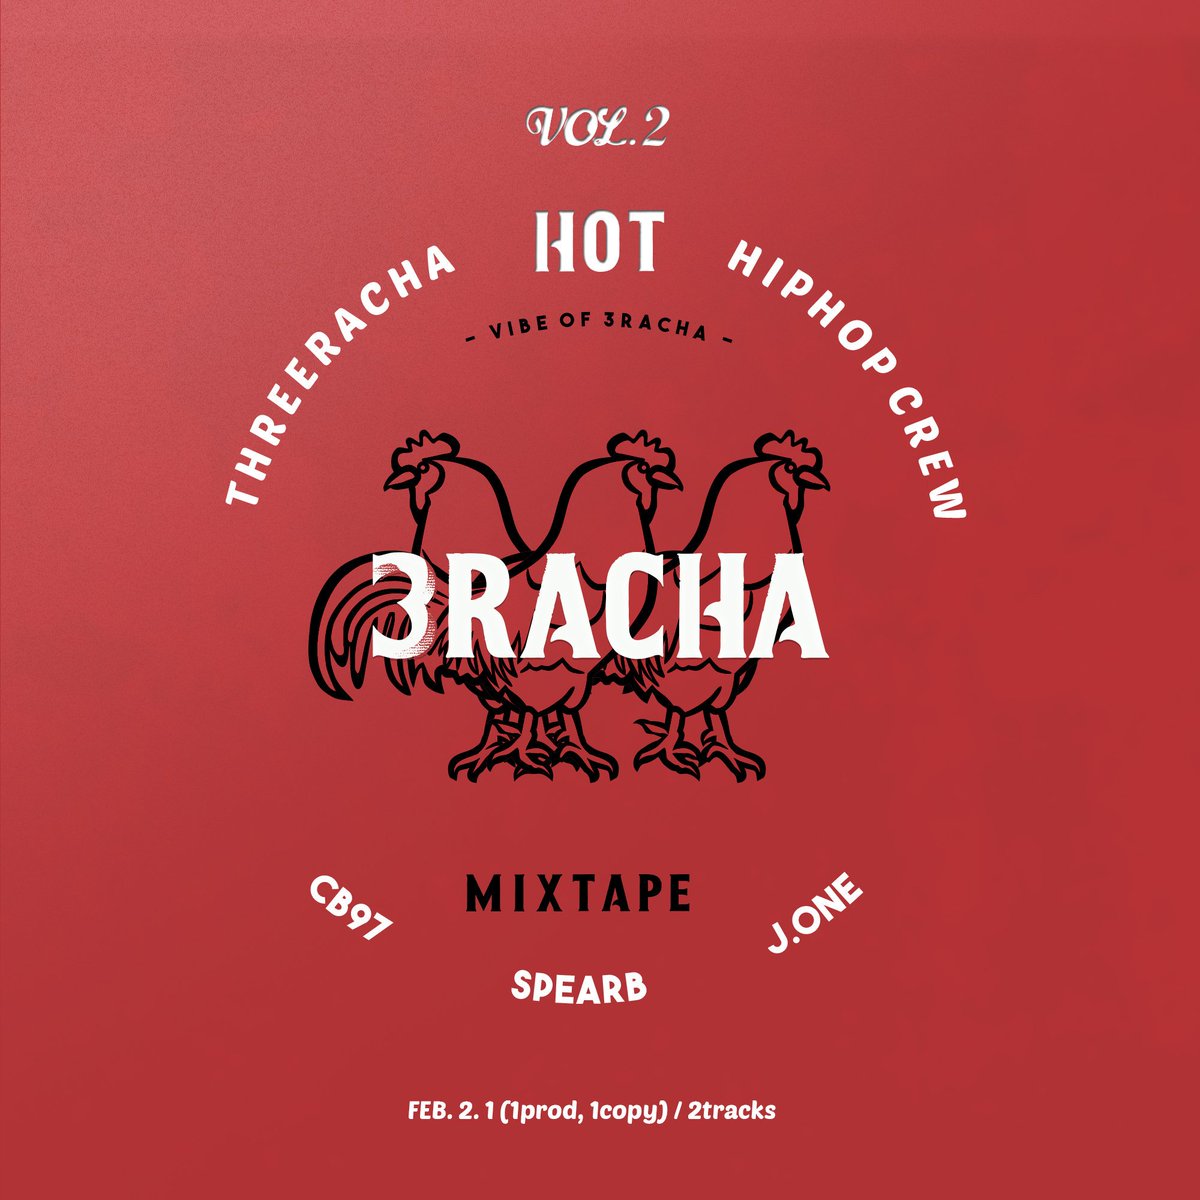 3racha stray kids песни. Cb97 3racha. 3racha обложки альбомов. 42 3racha обложка. 3racha эмблема.